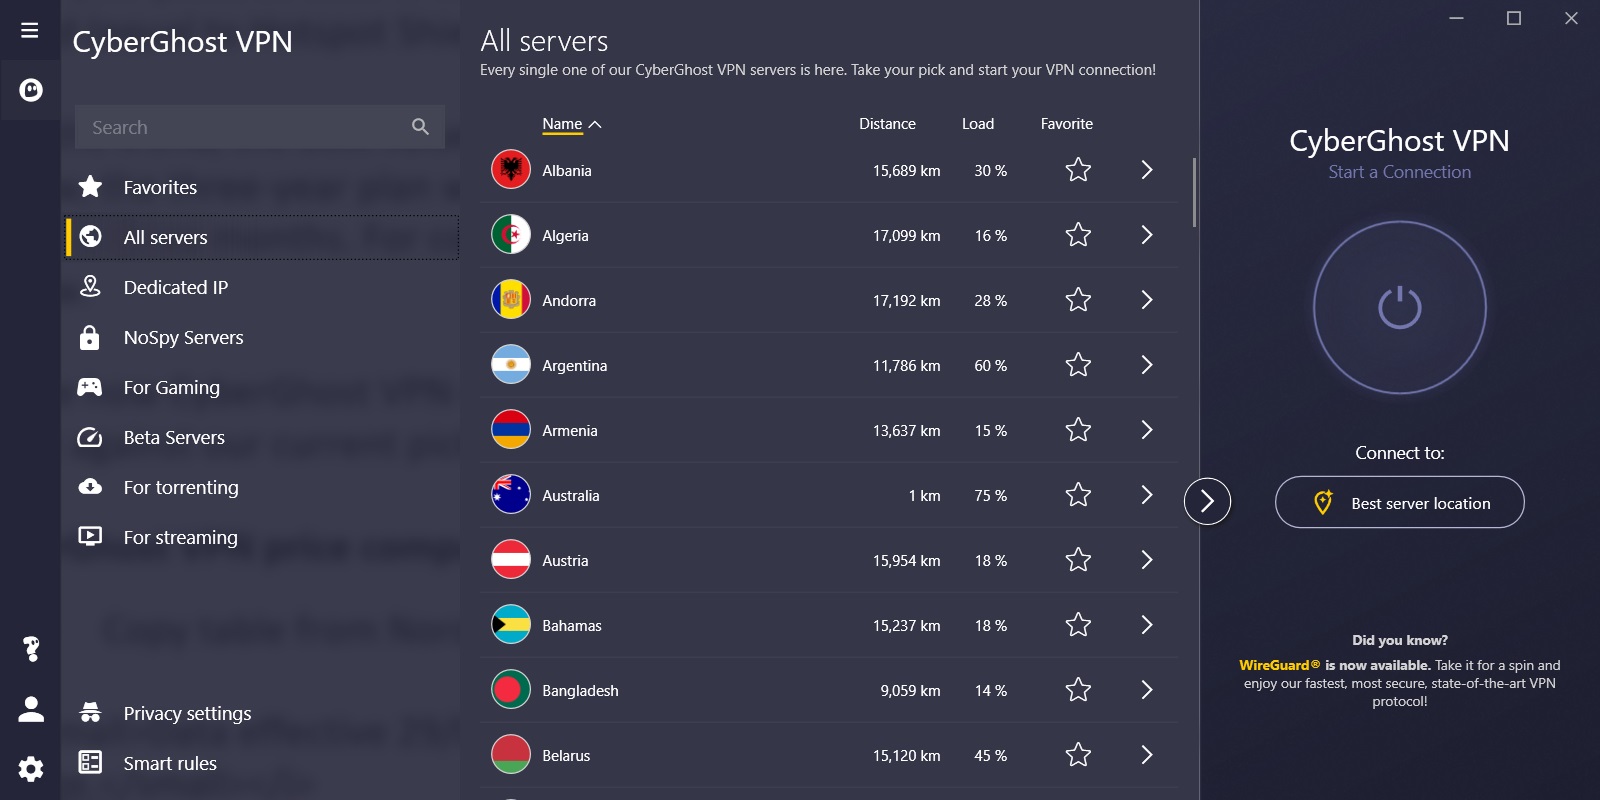 Access all servers worldwide